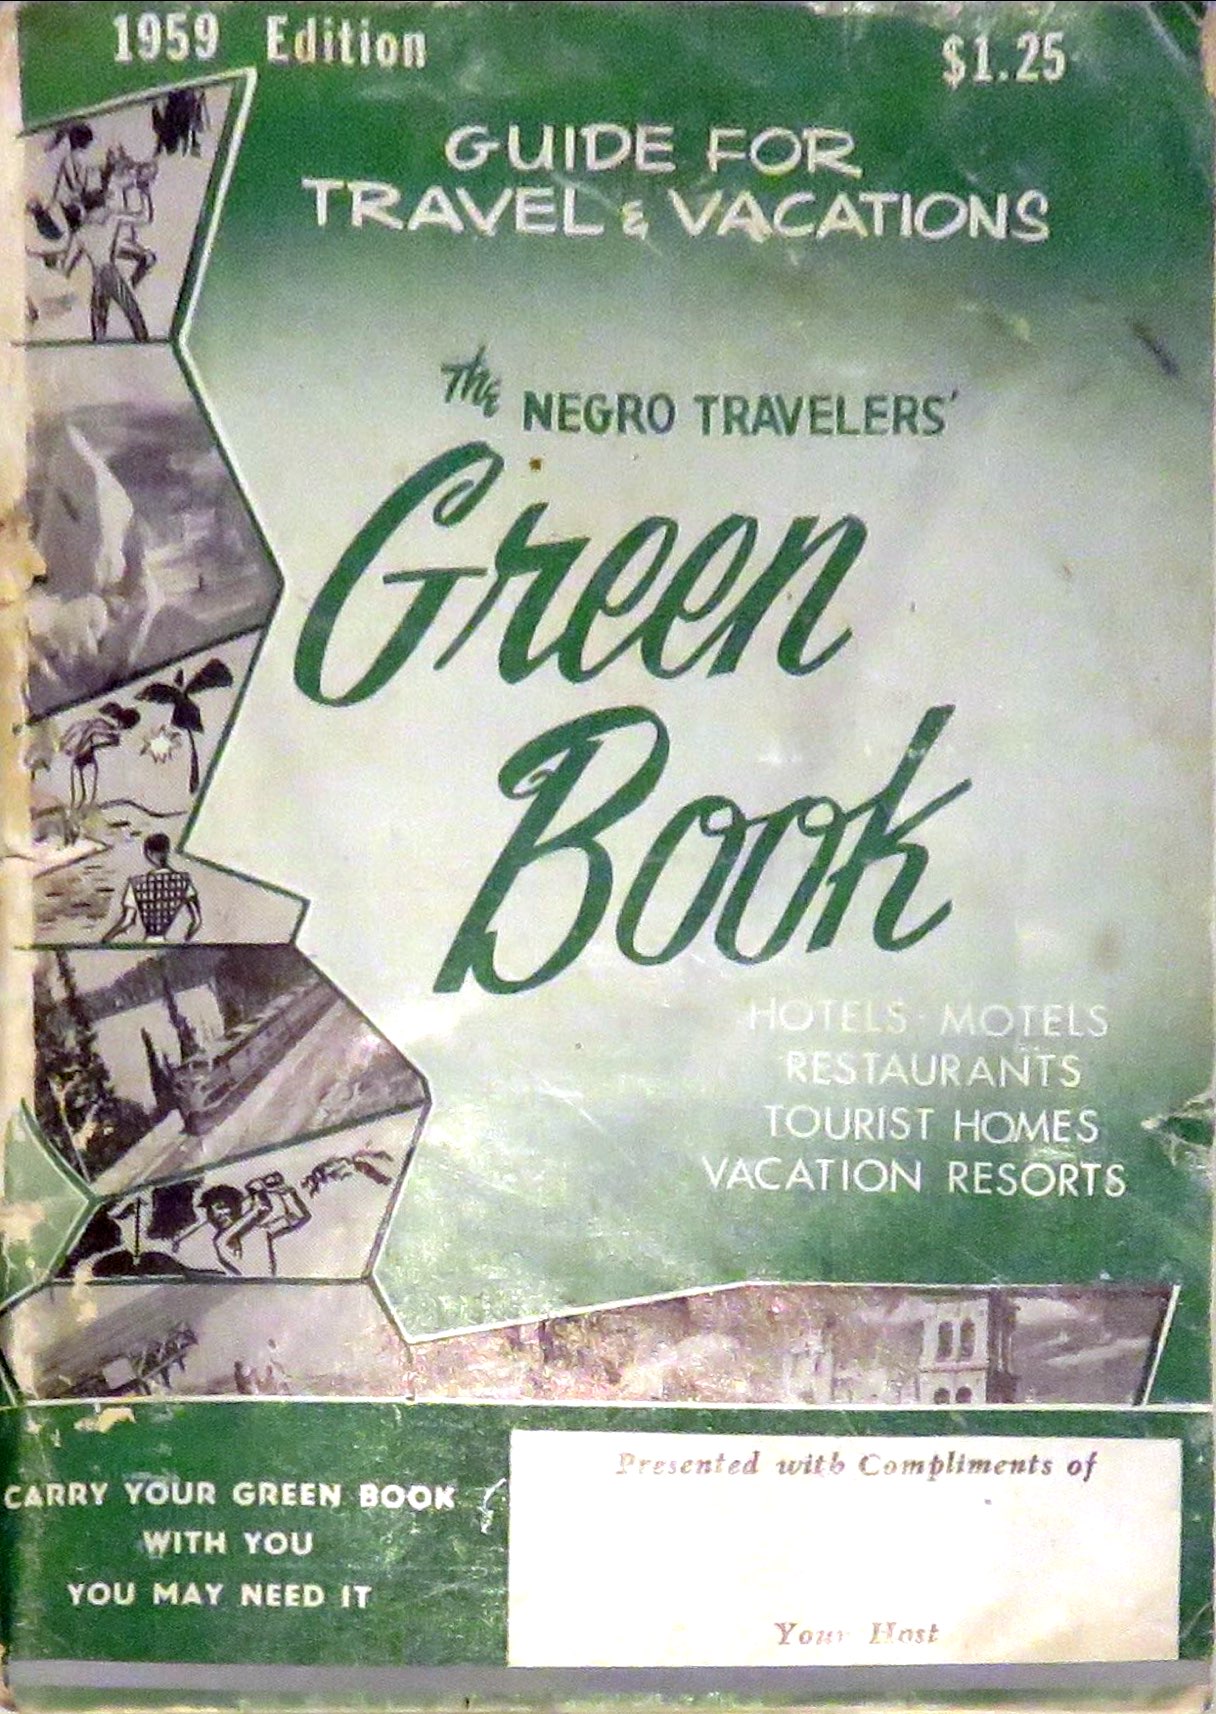 The Negro Travelers' Green Book